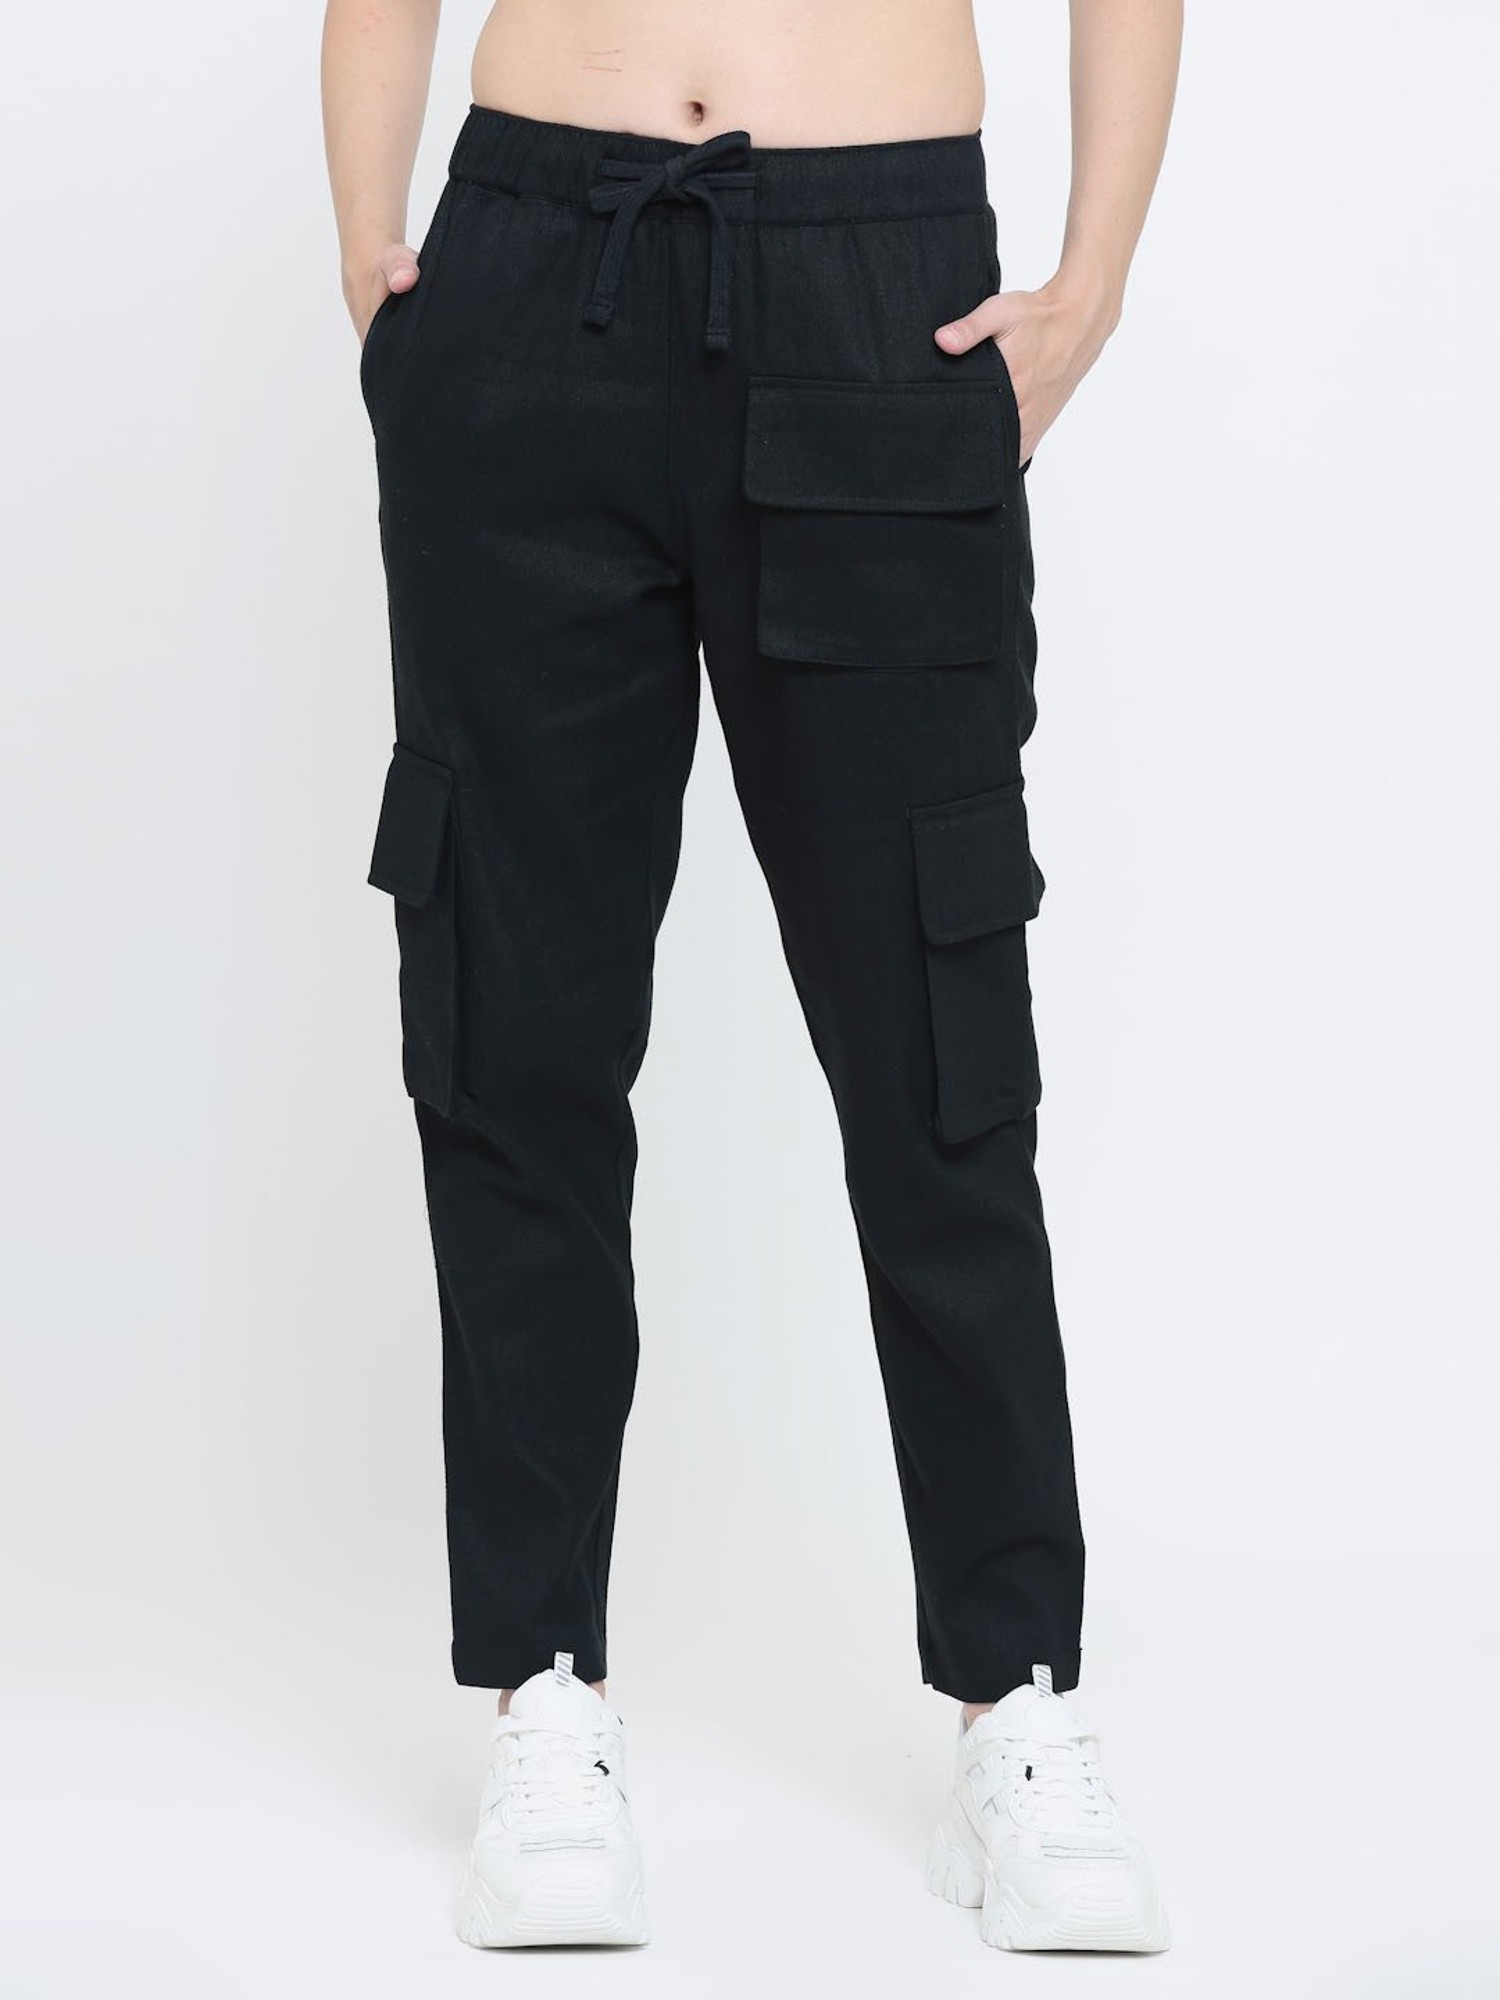 WorkwearTech Women's Cargo Pant